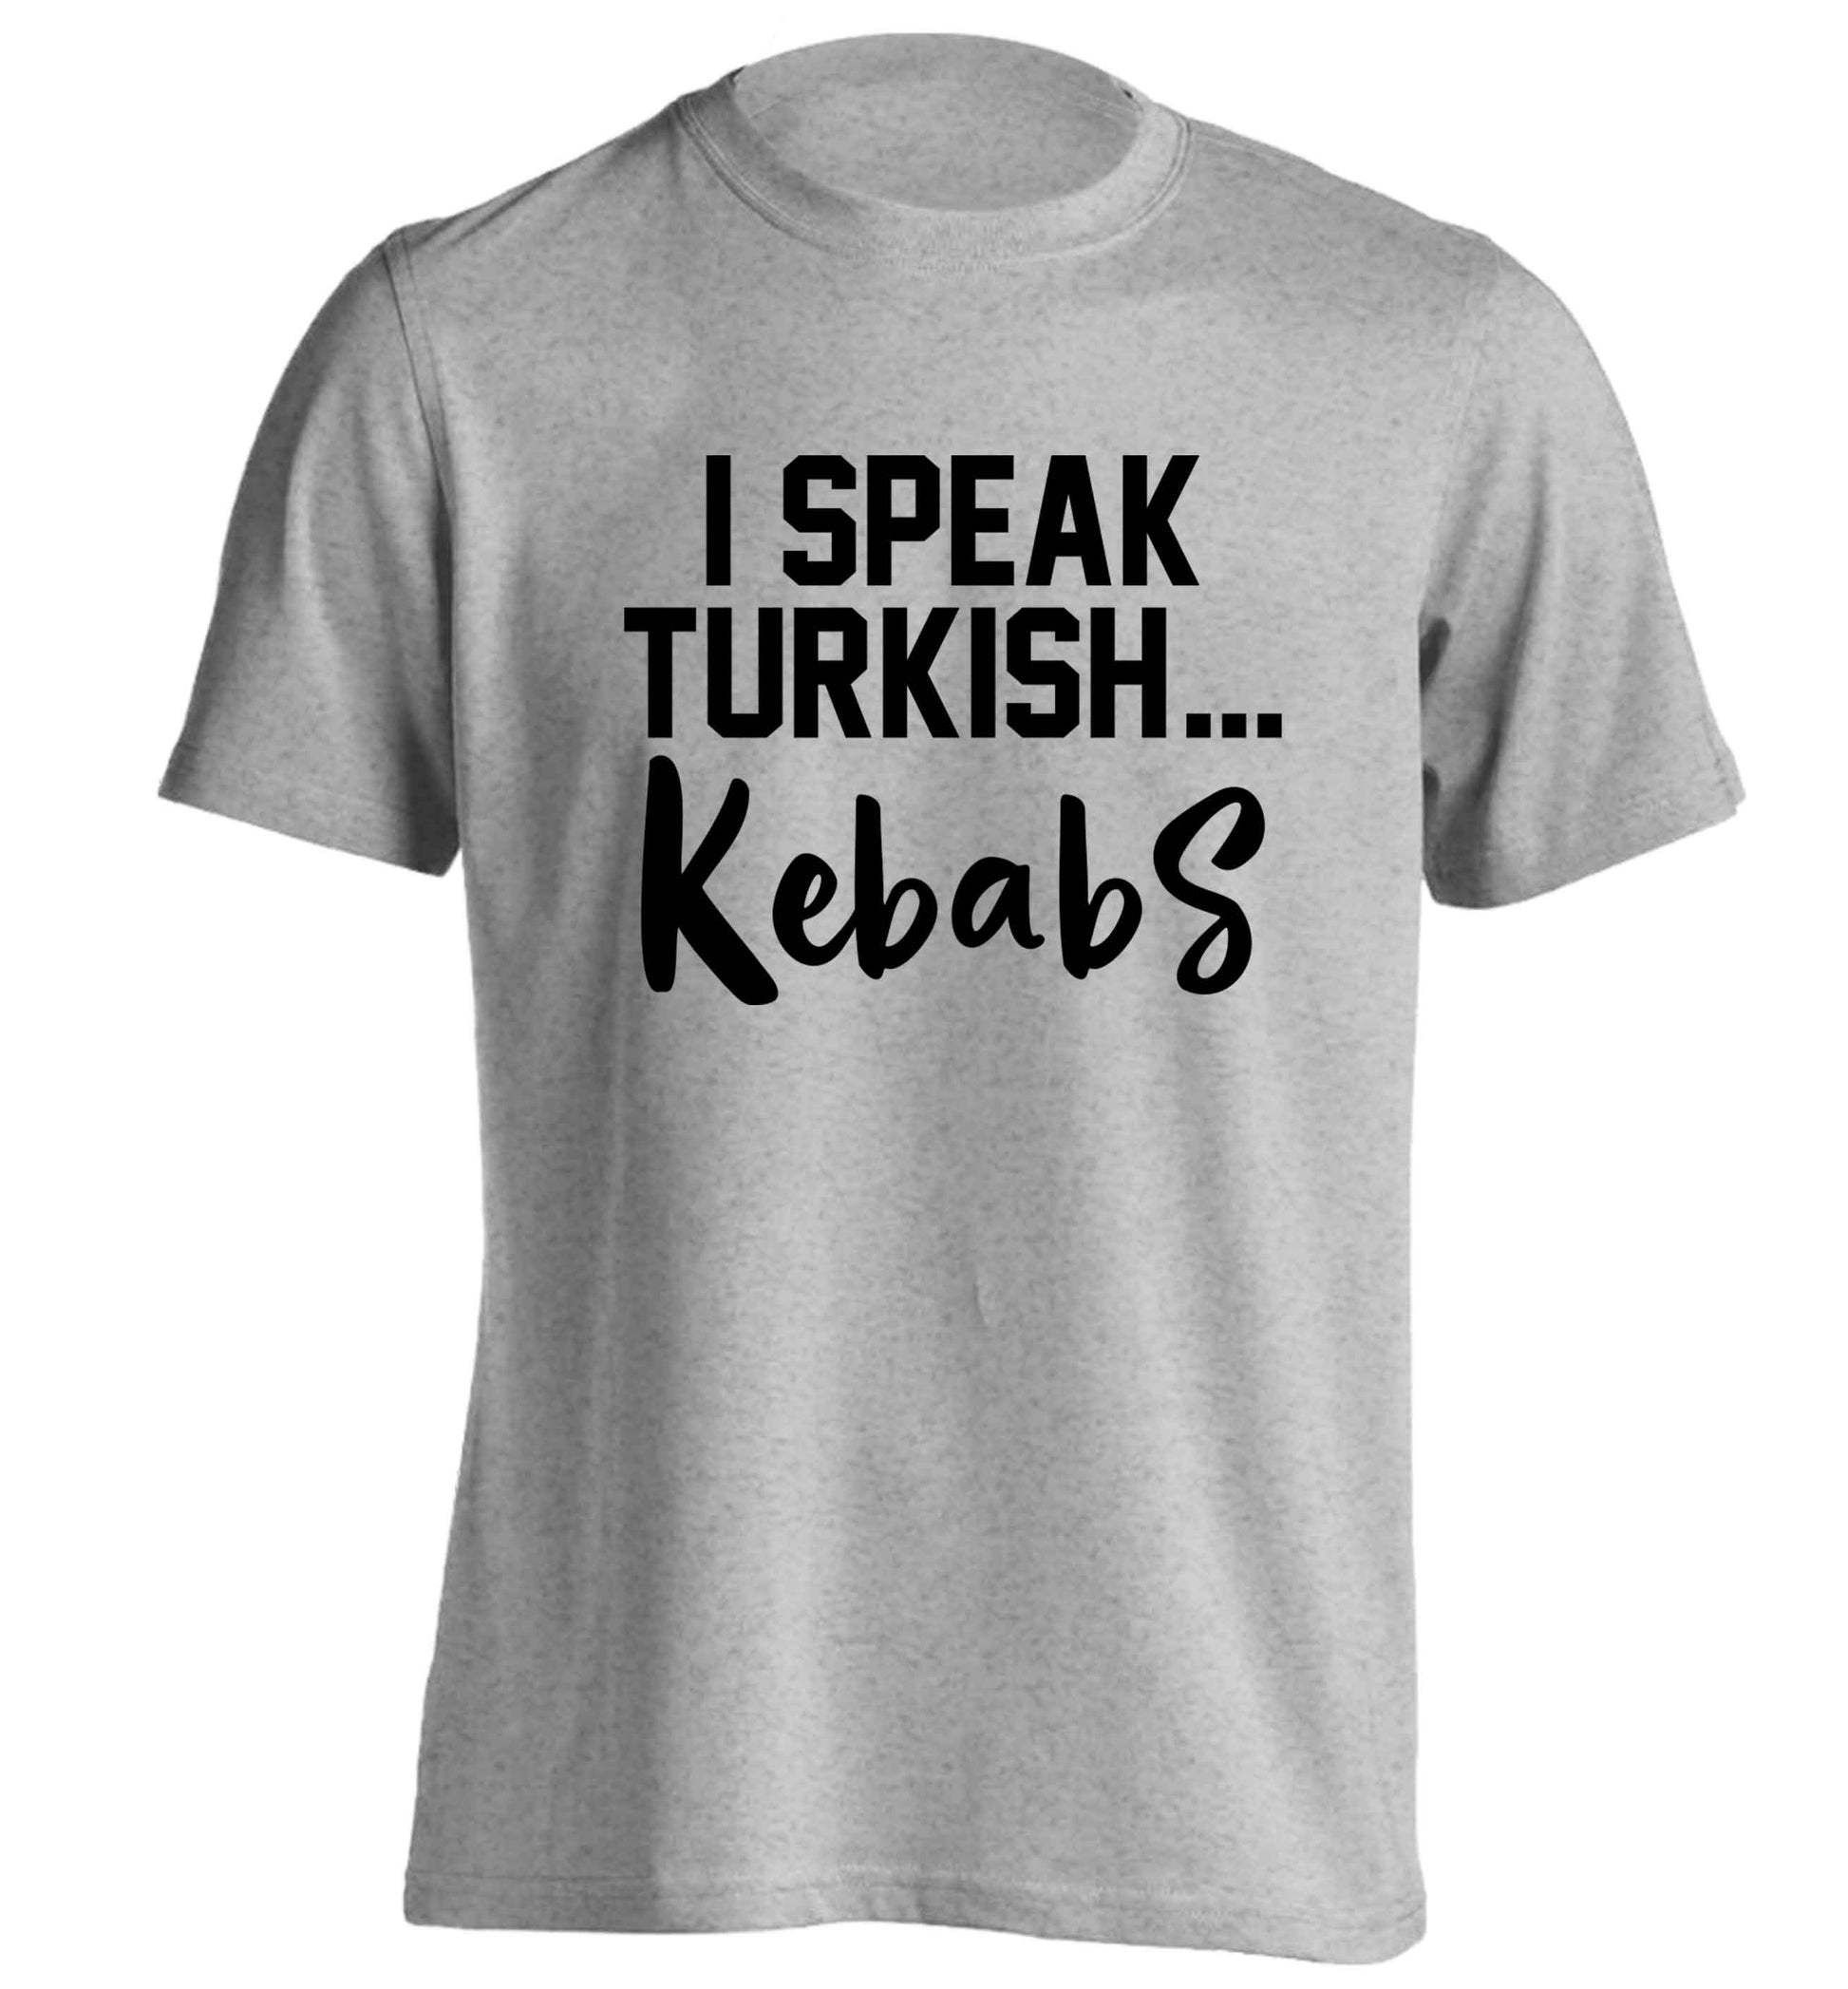 I speak Turkish...kebabs adults unisex grey Tshirt 2XL